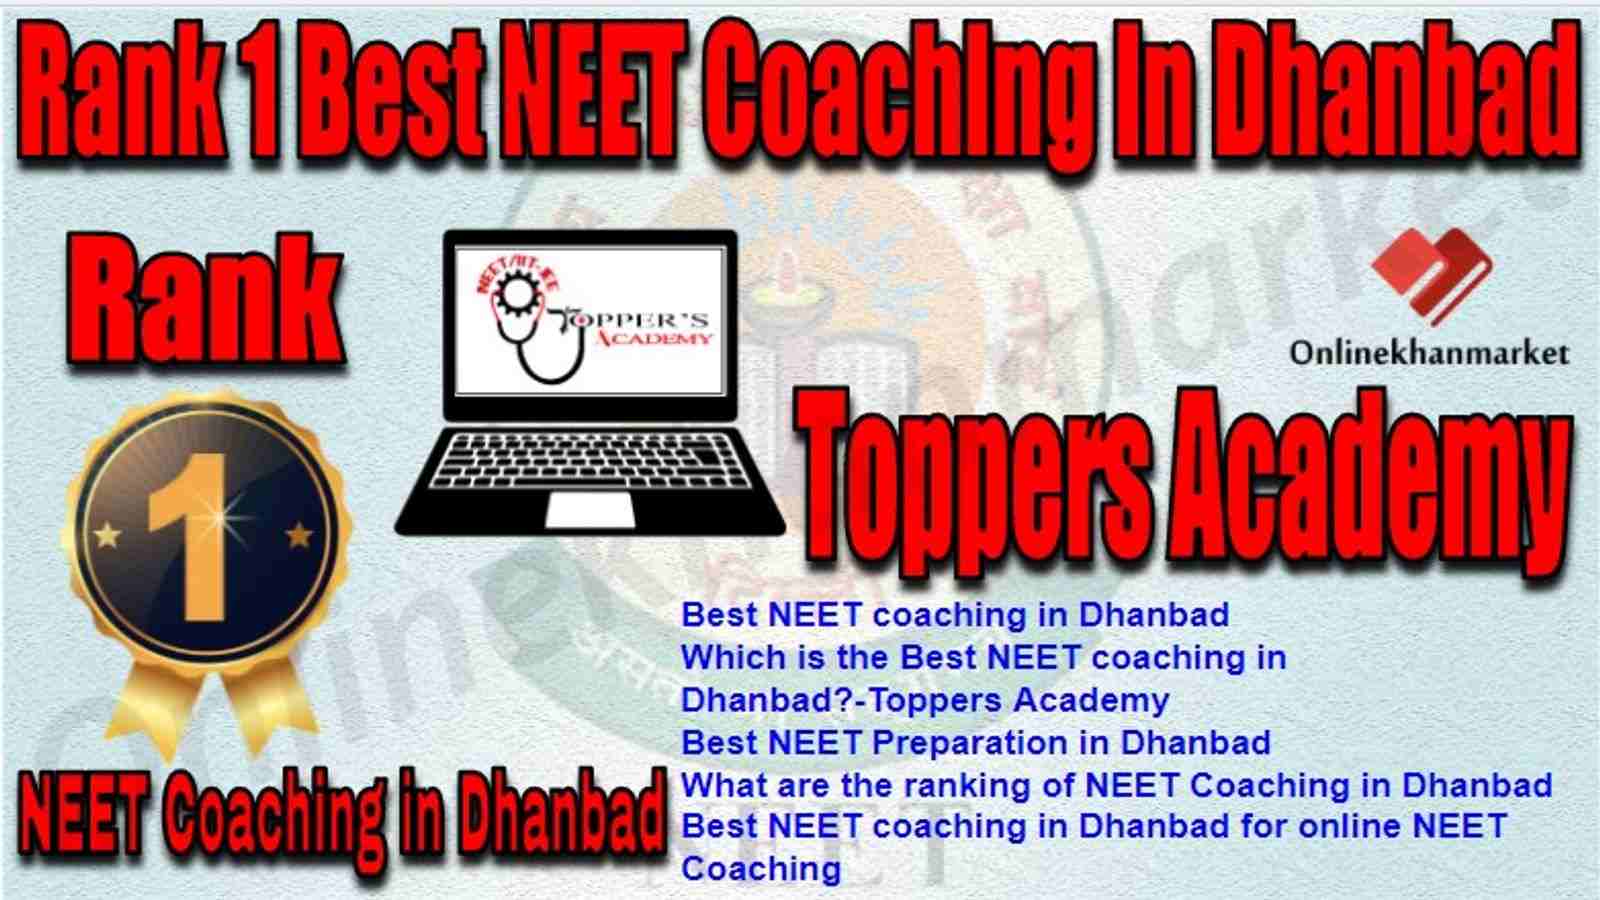 Rank 1 Best NEET Coaching dhanbad